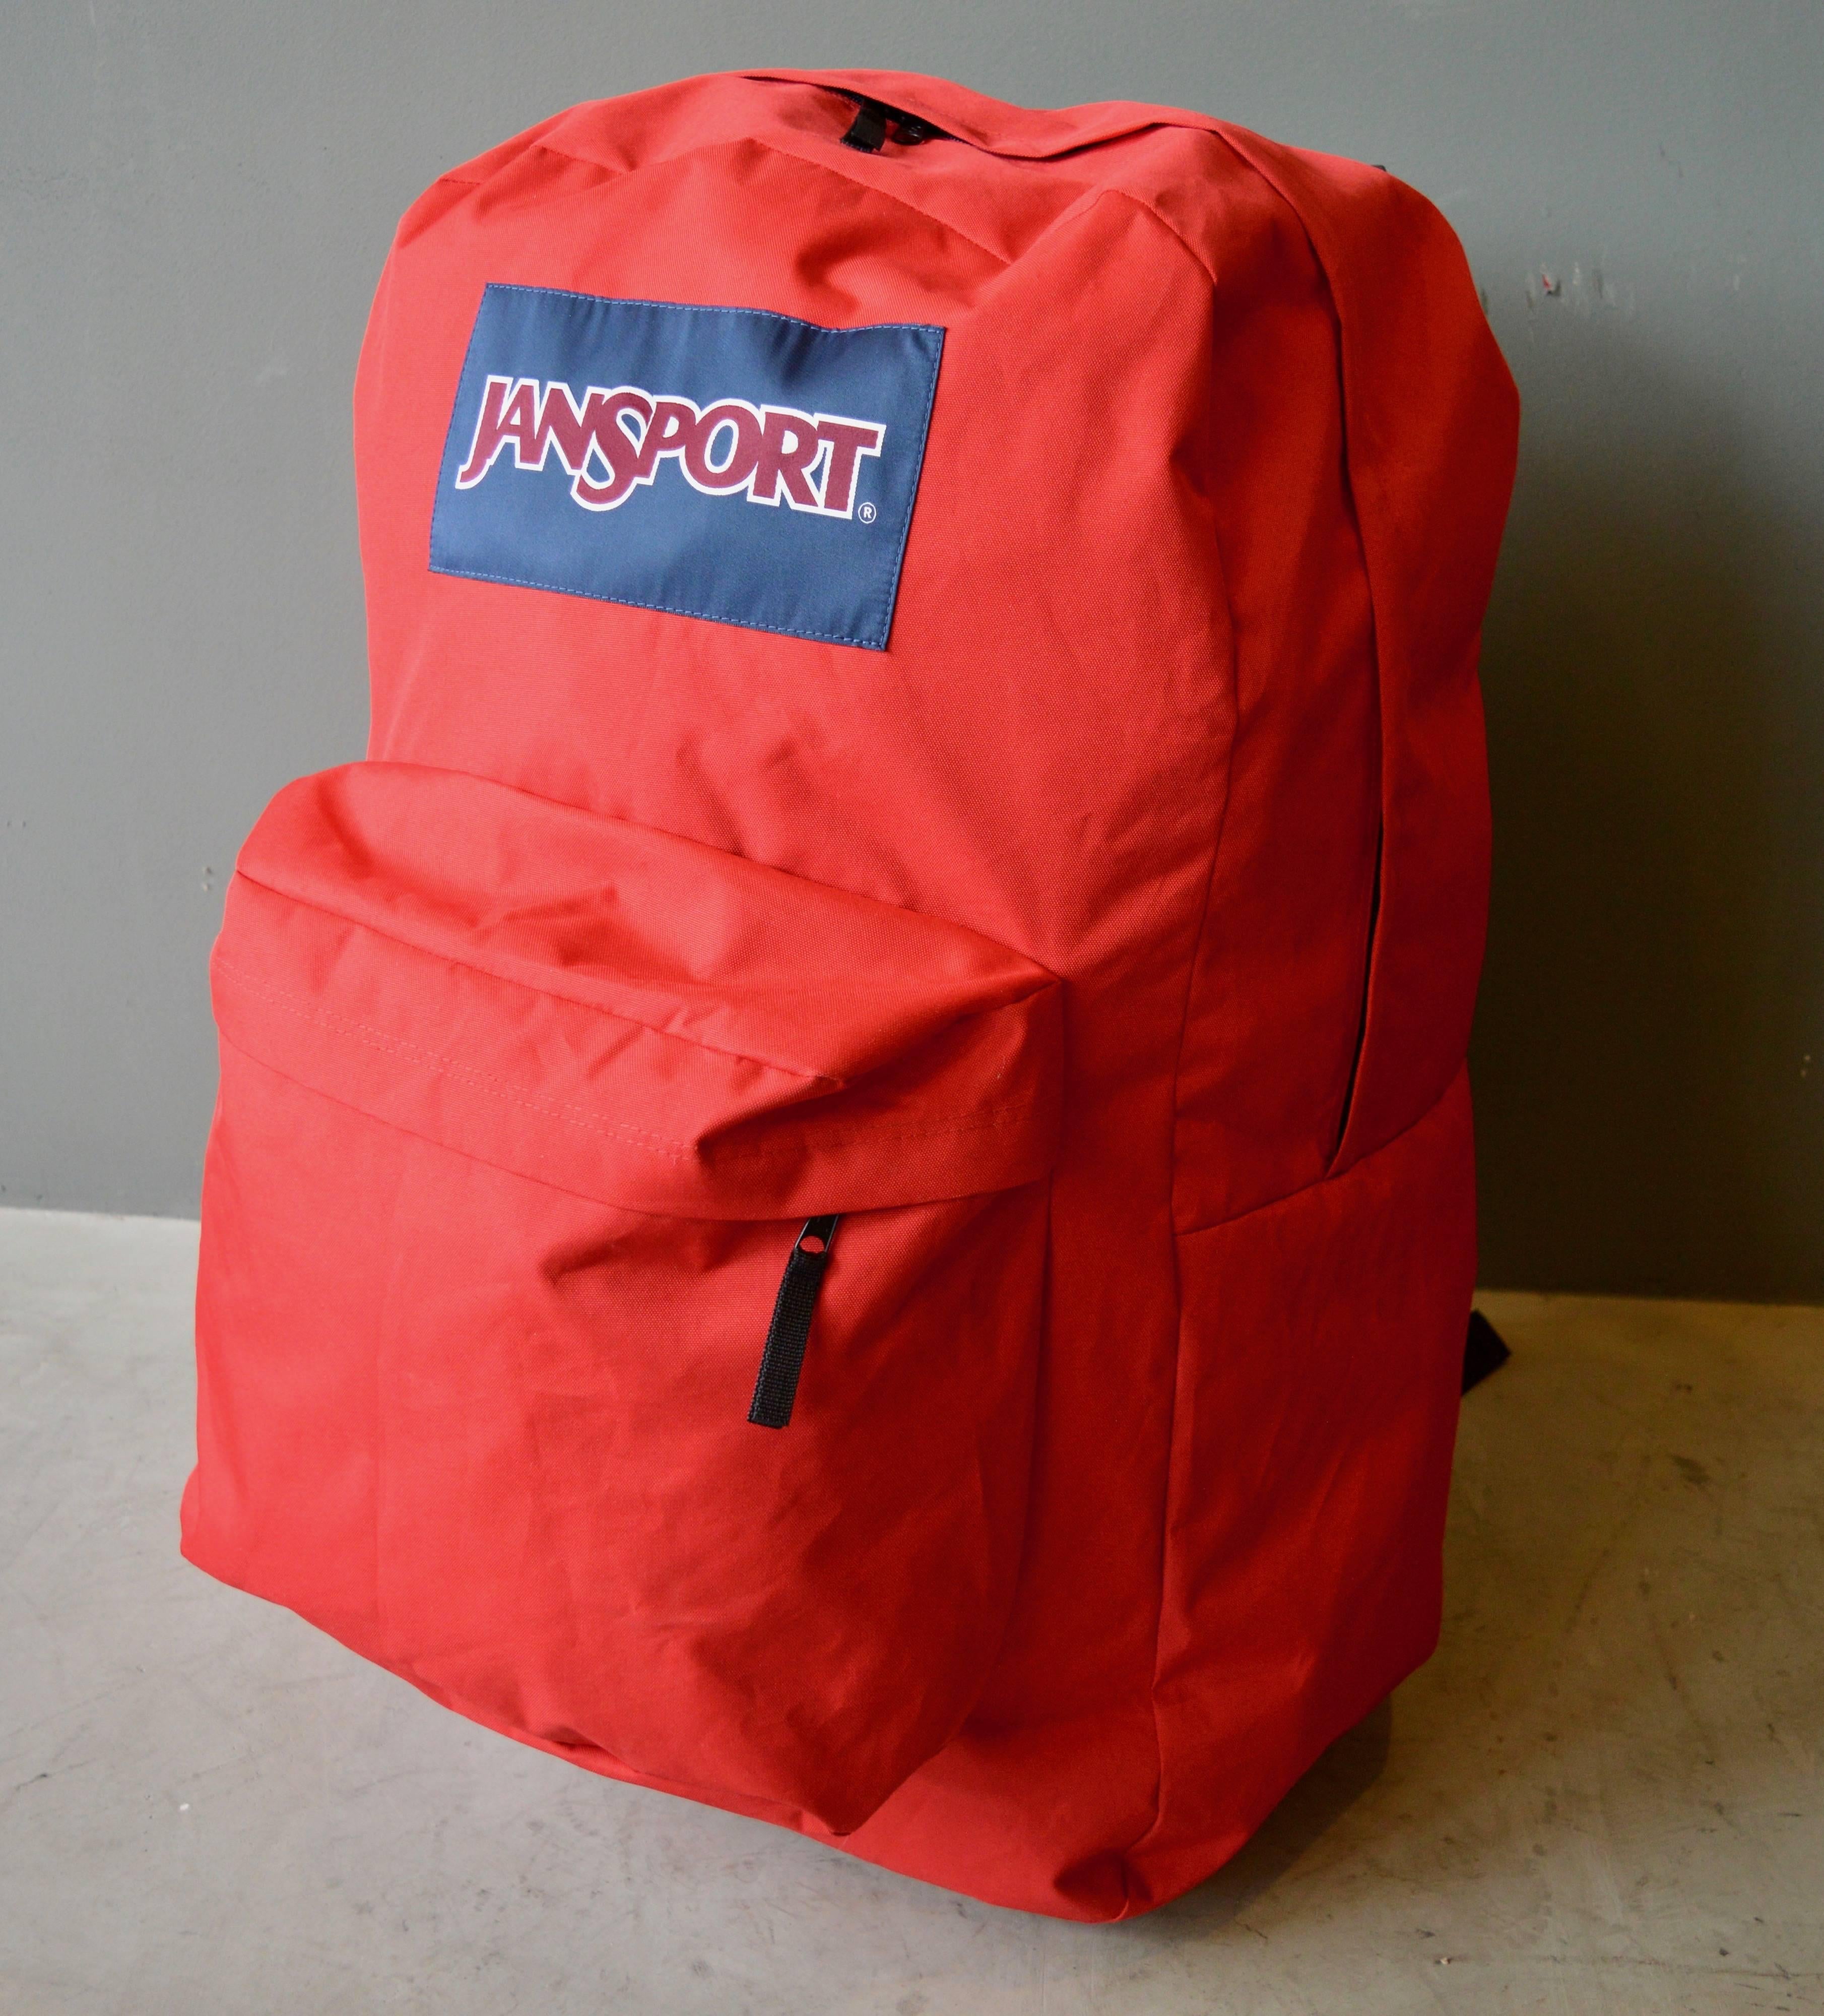 American Massive Oversized Jansport Backpacks For Sale